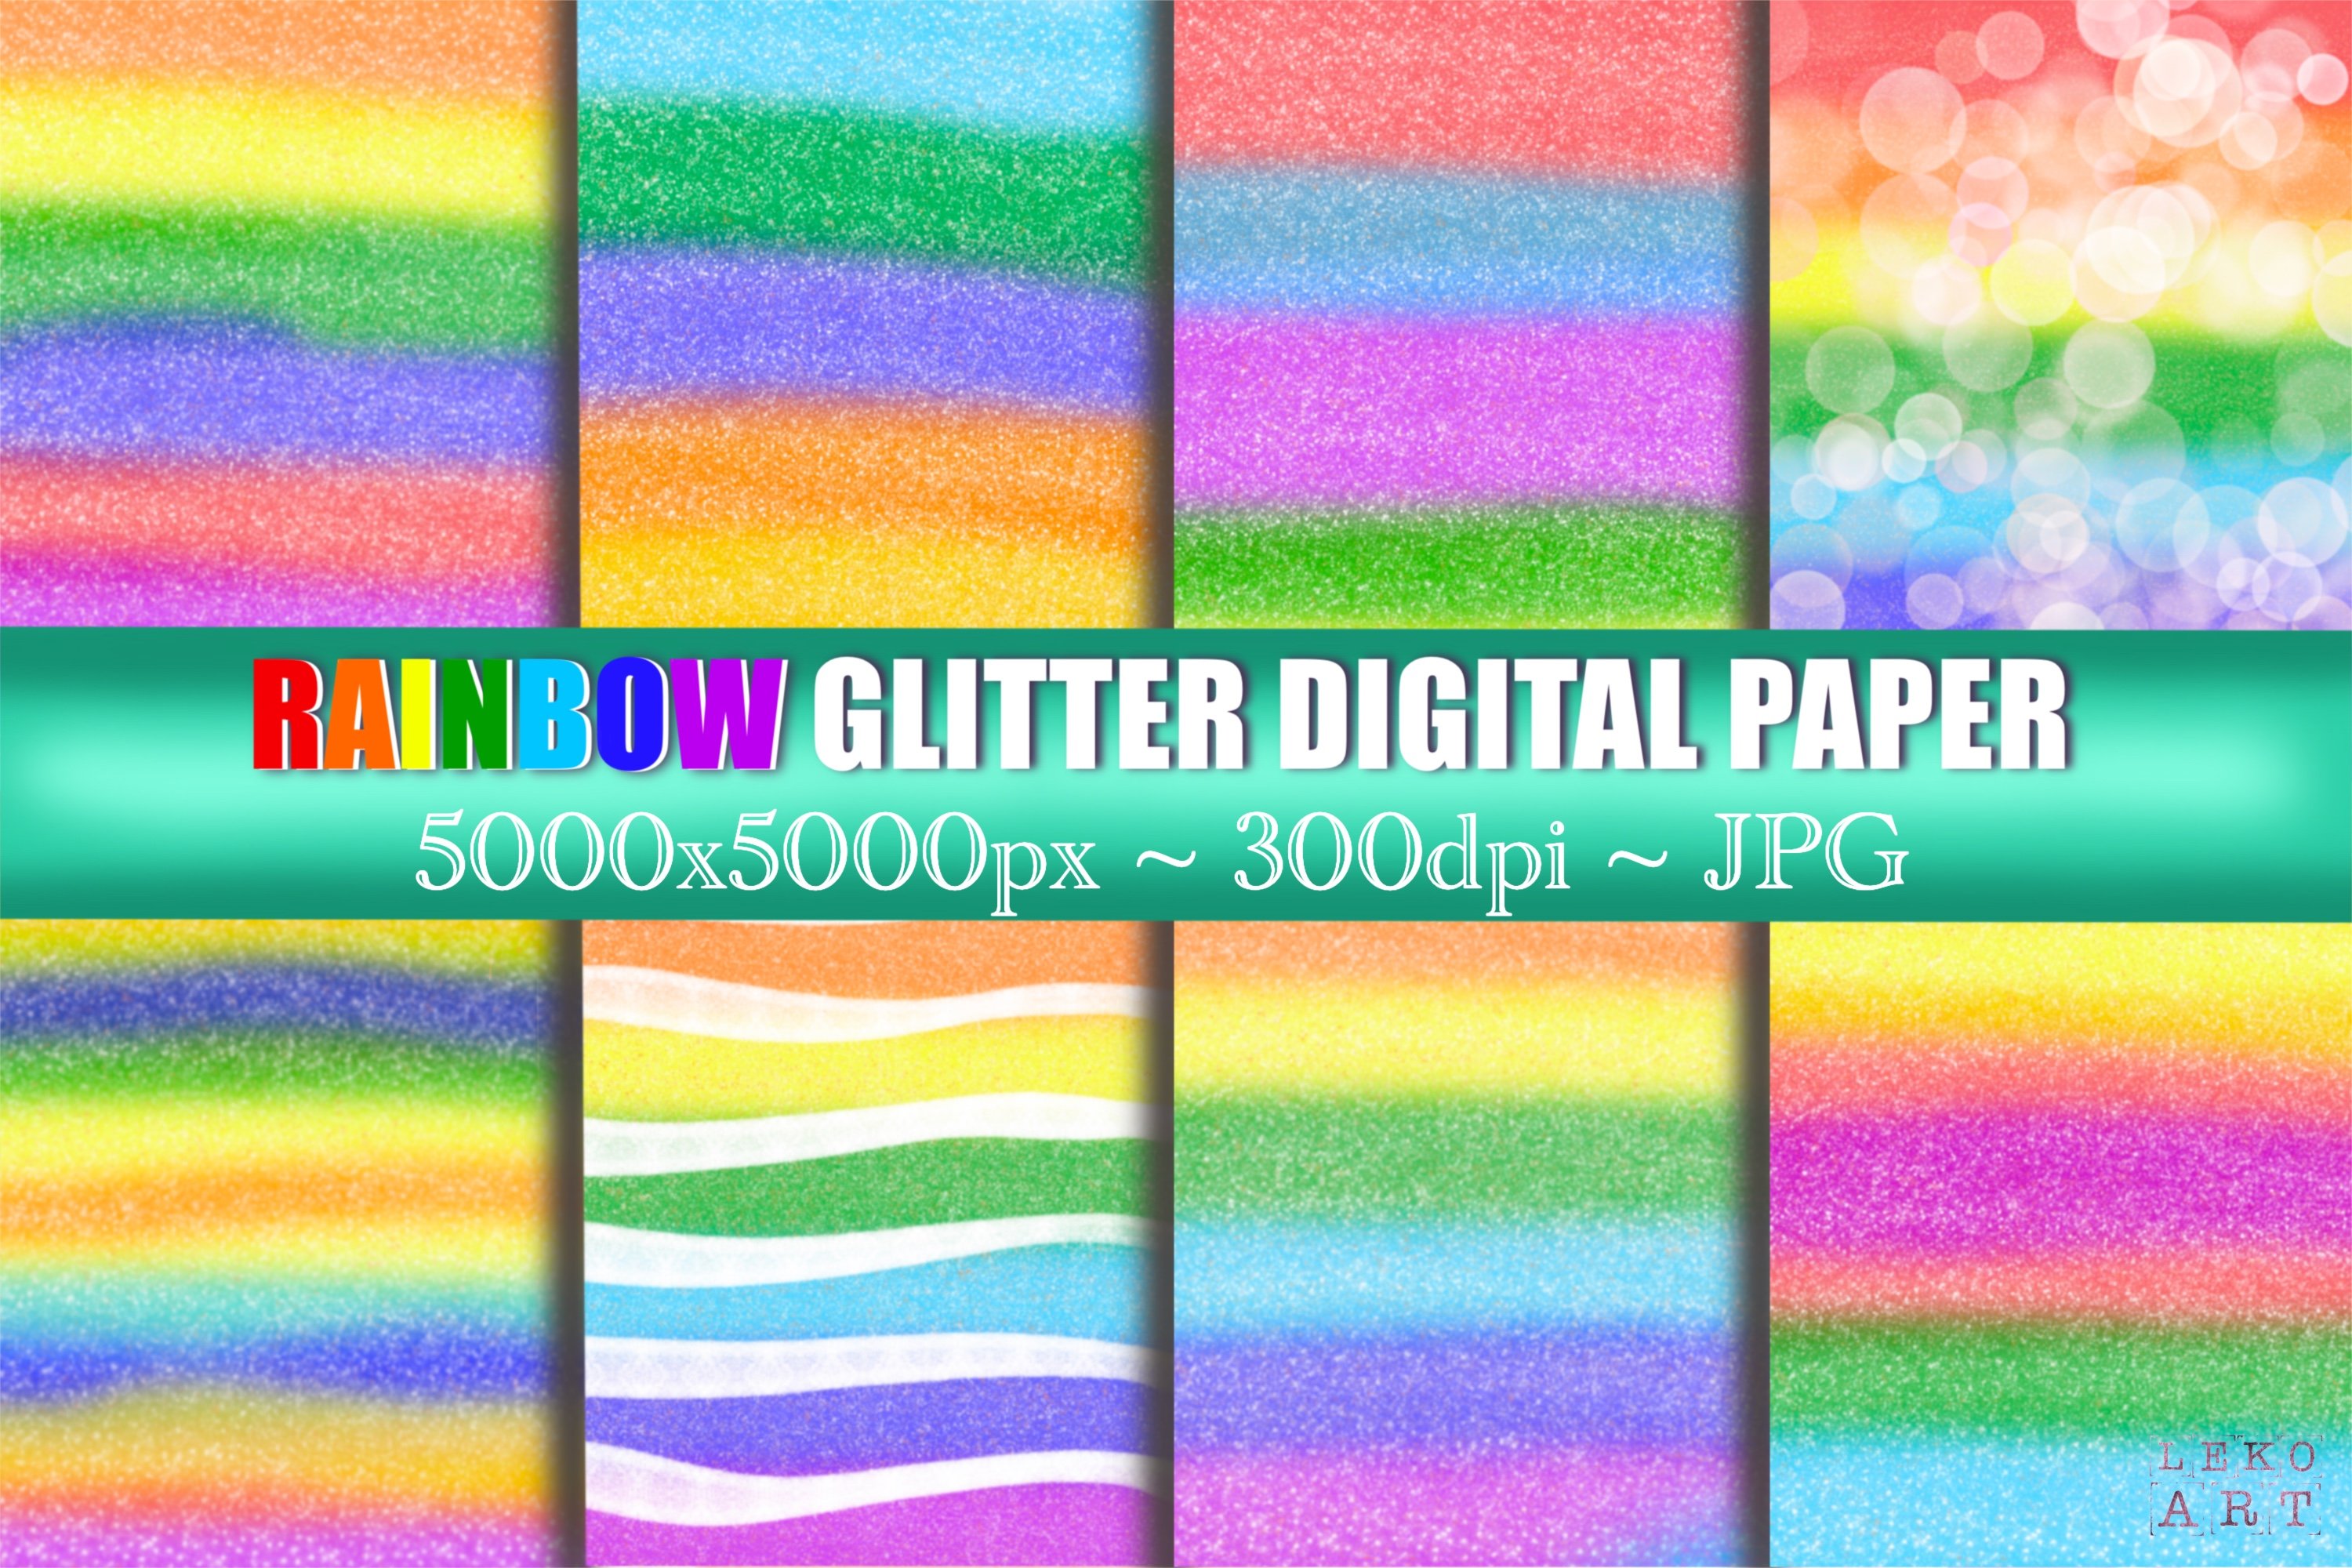 Rainbow Glitter Digital Paper cover image.